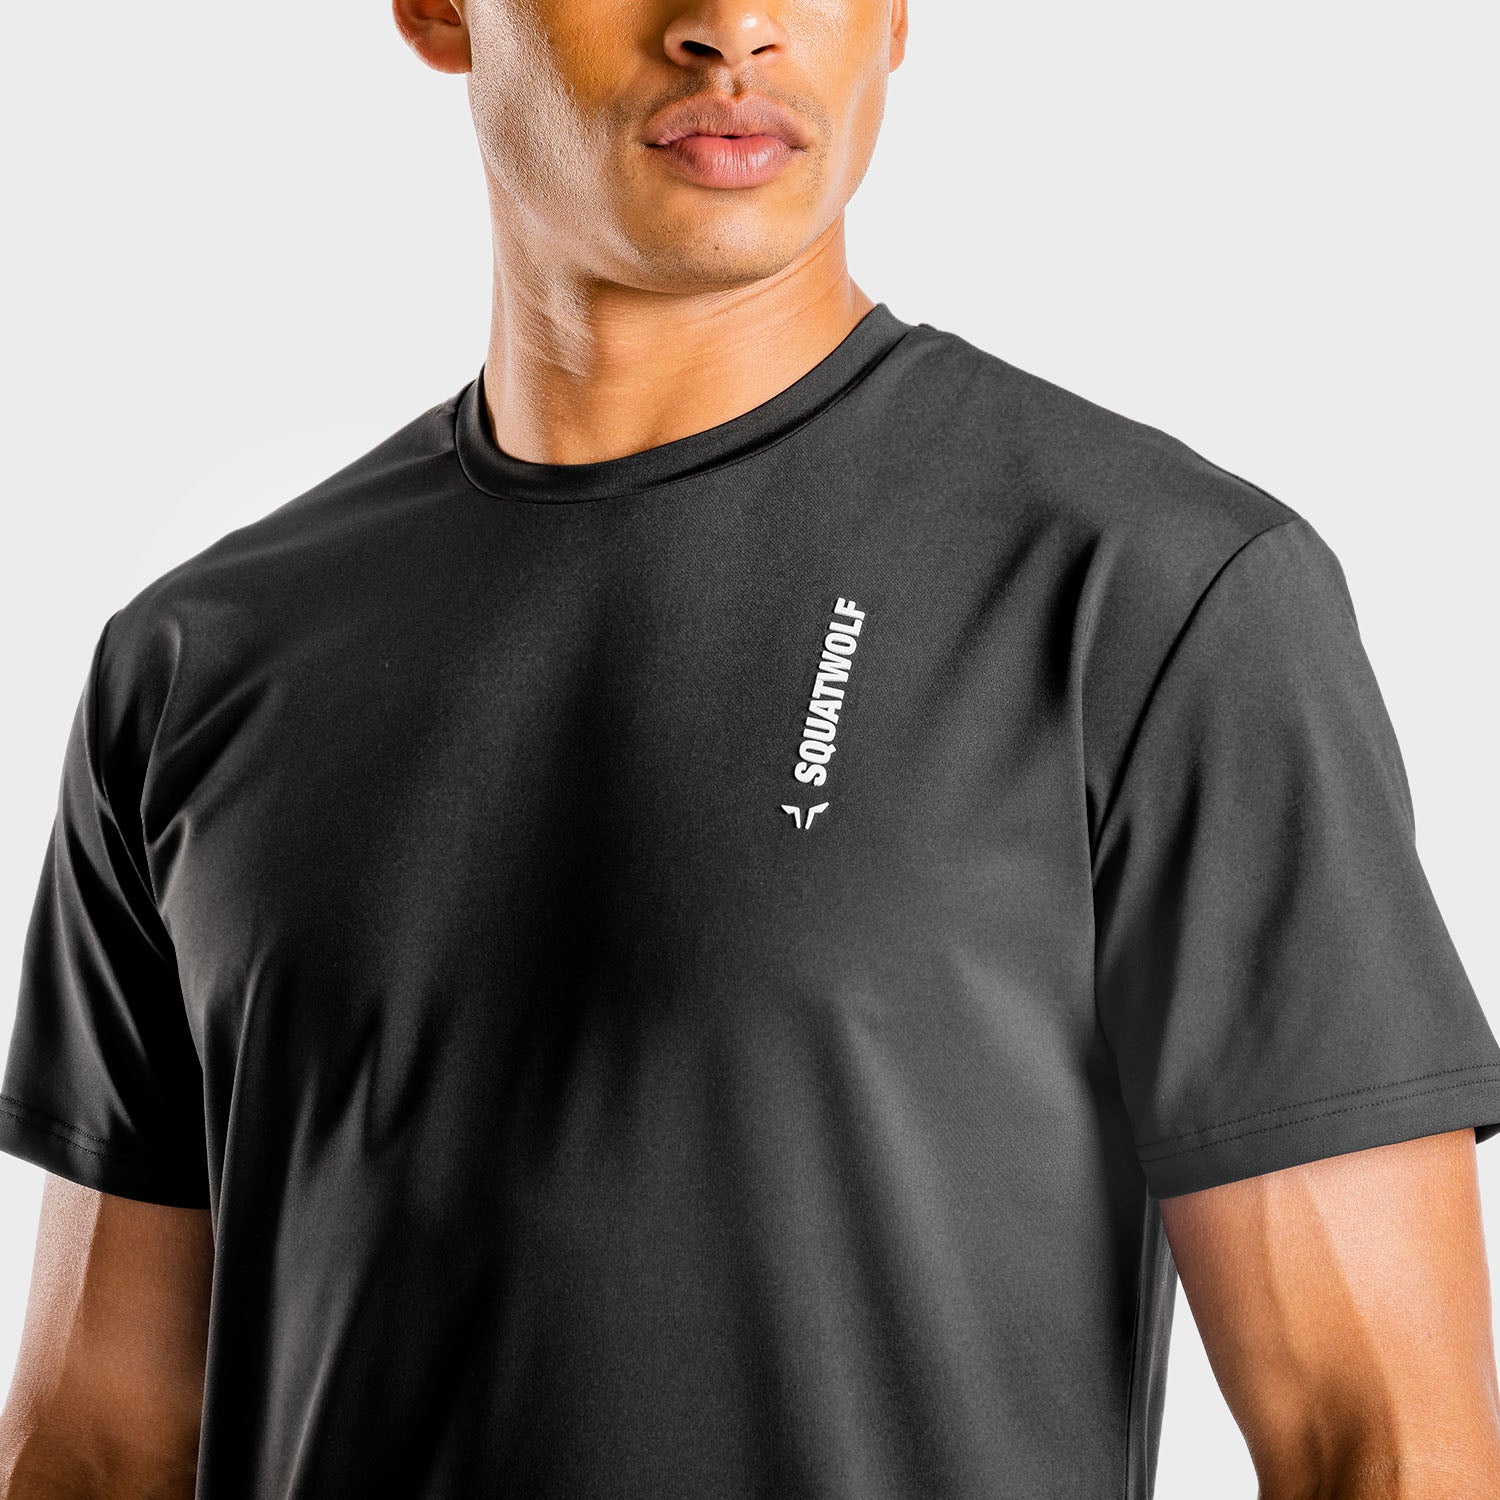 squatwolf-gym-wear-flux-tee-black-workout-shirts-for-men